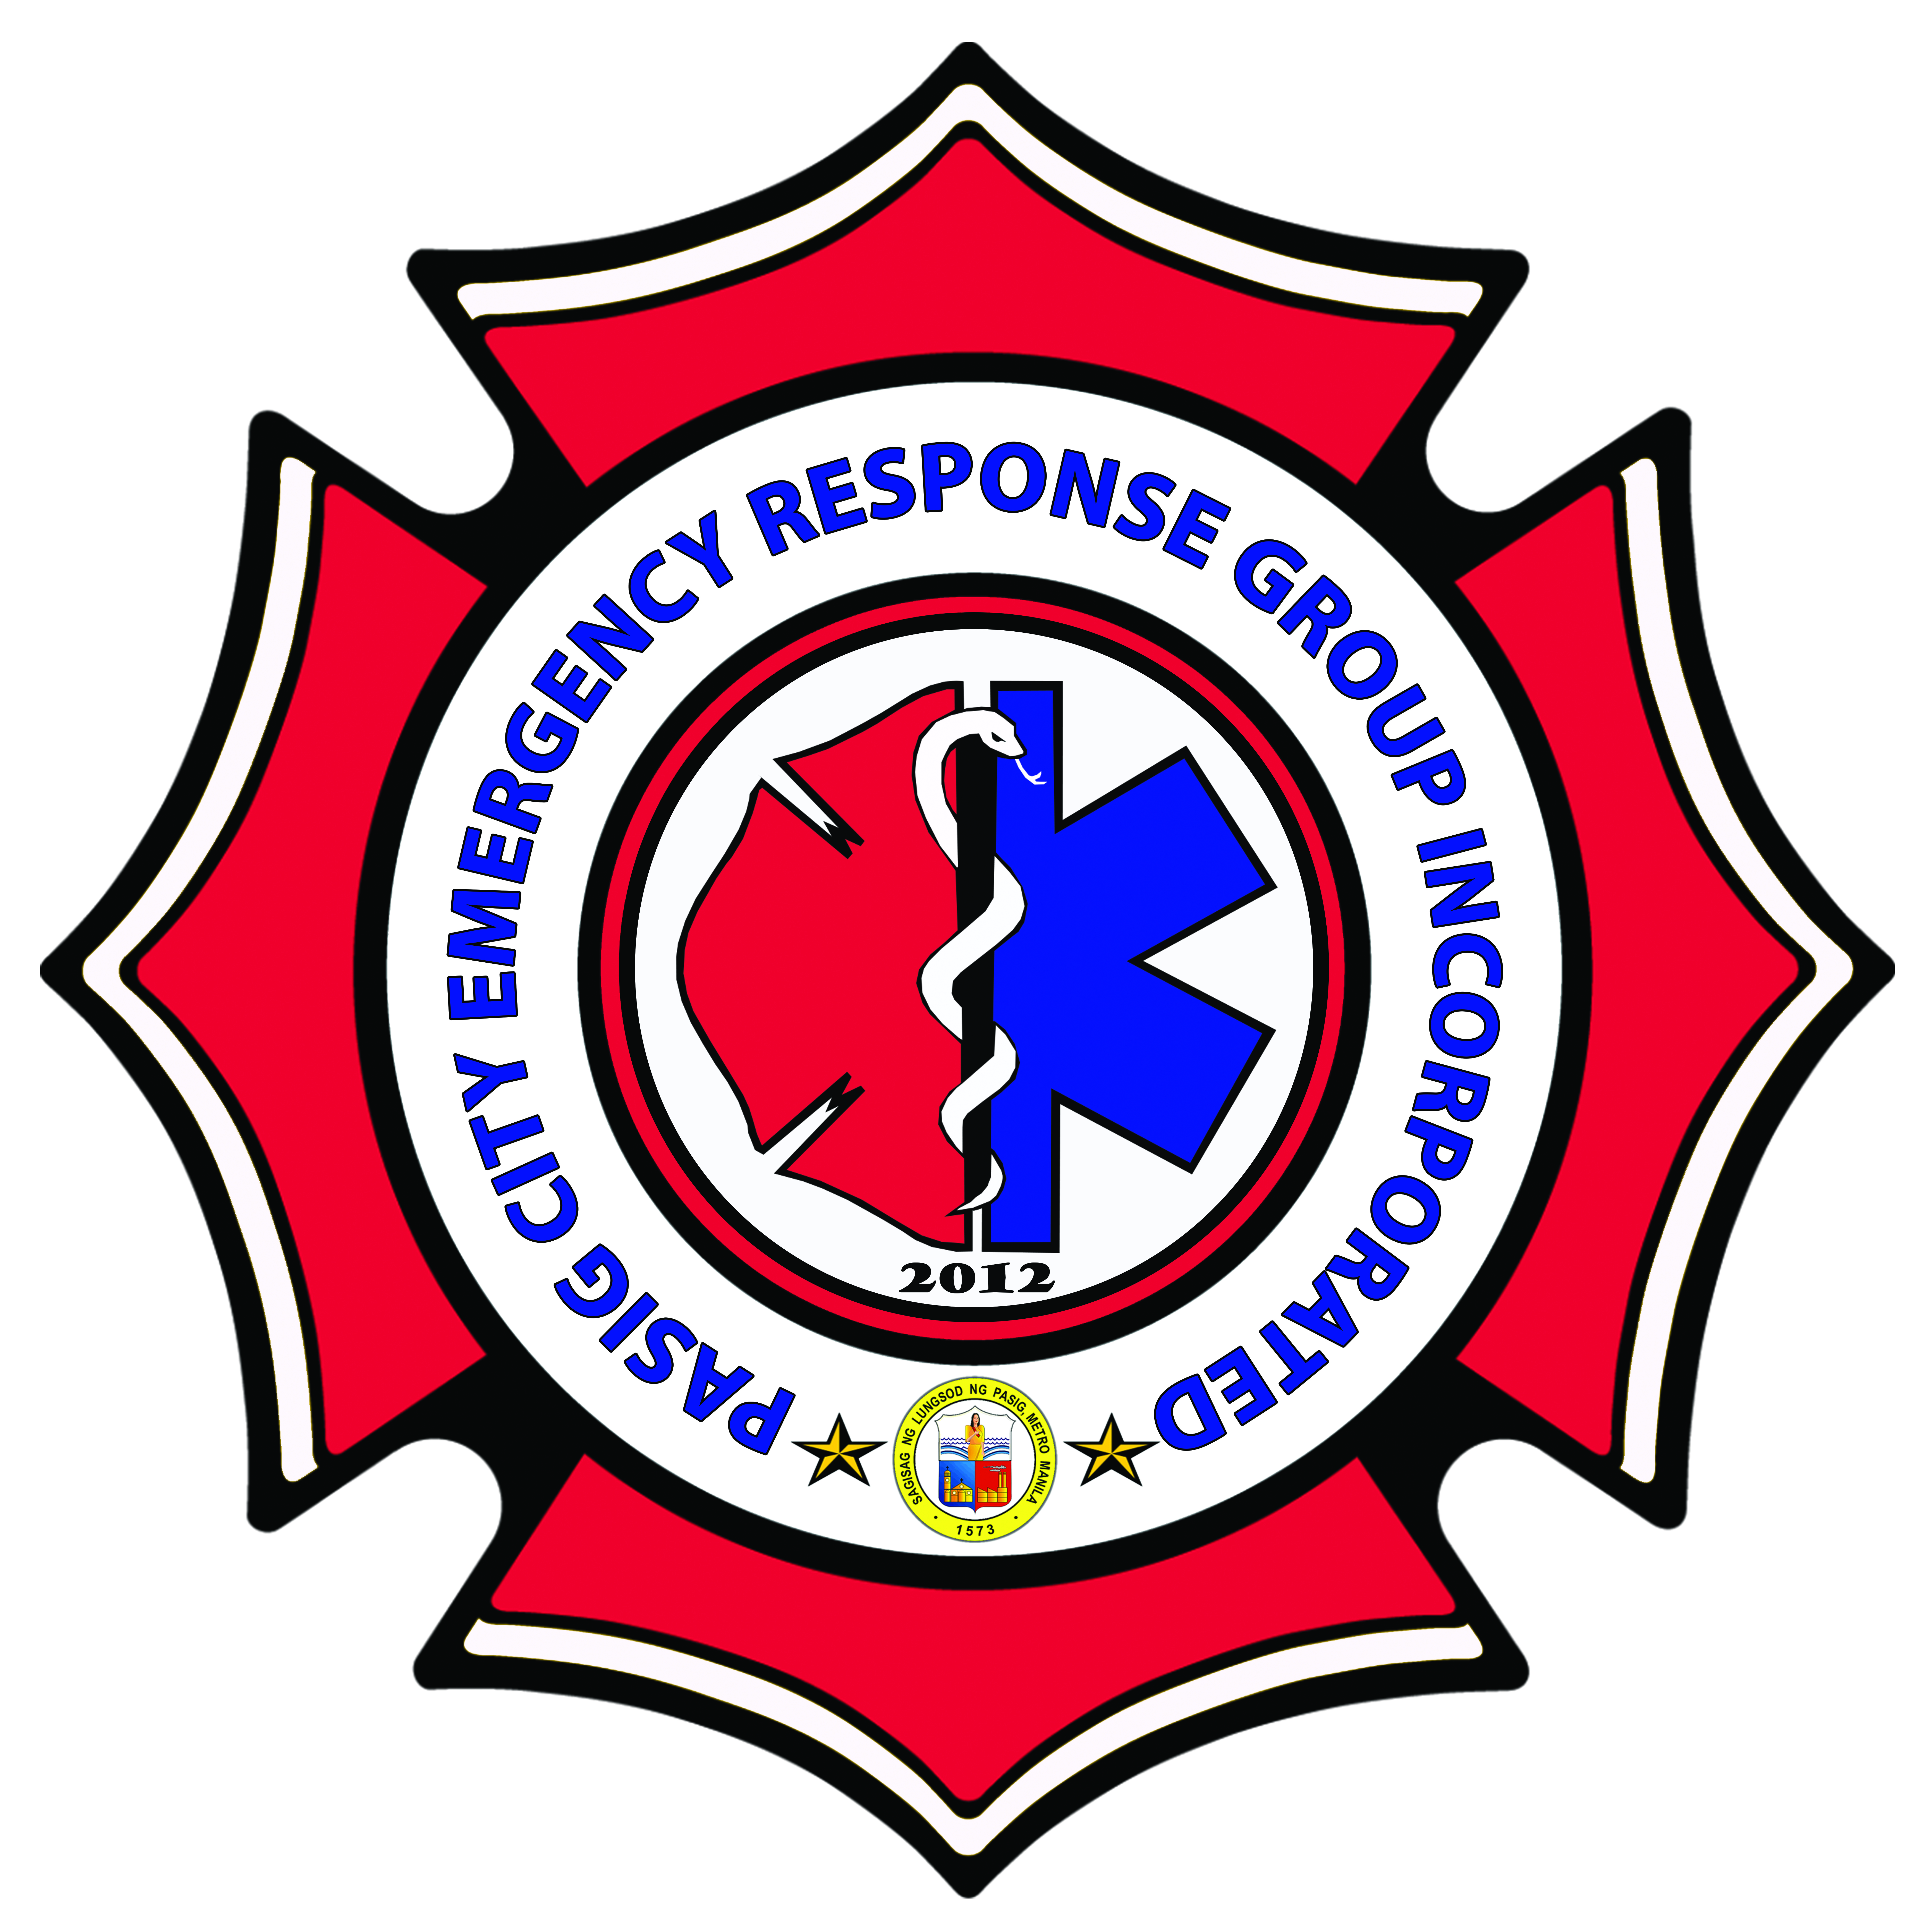 Pasig City Emergency Response Group Inc.